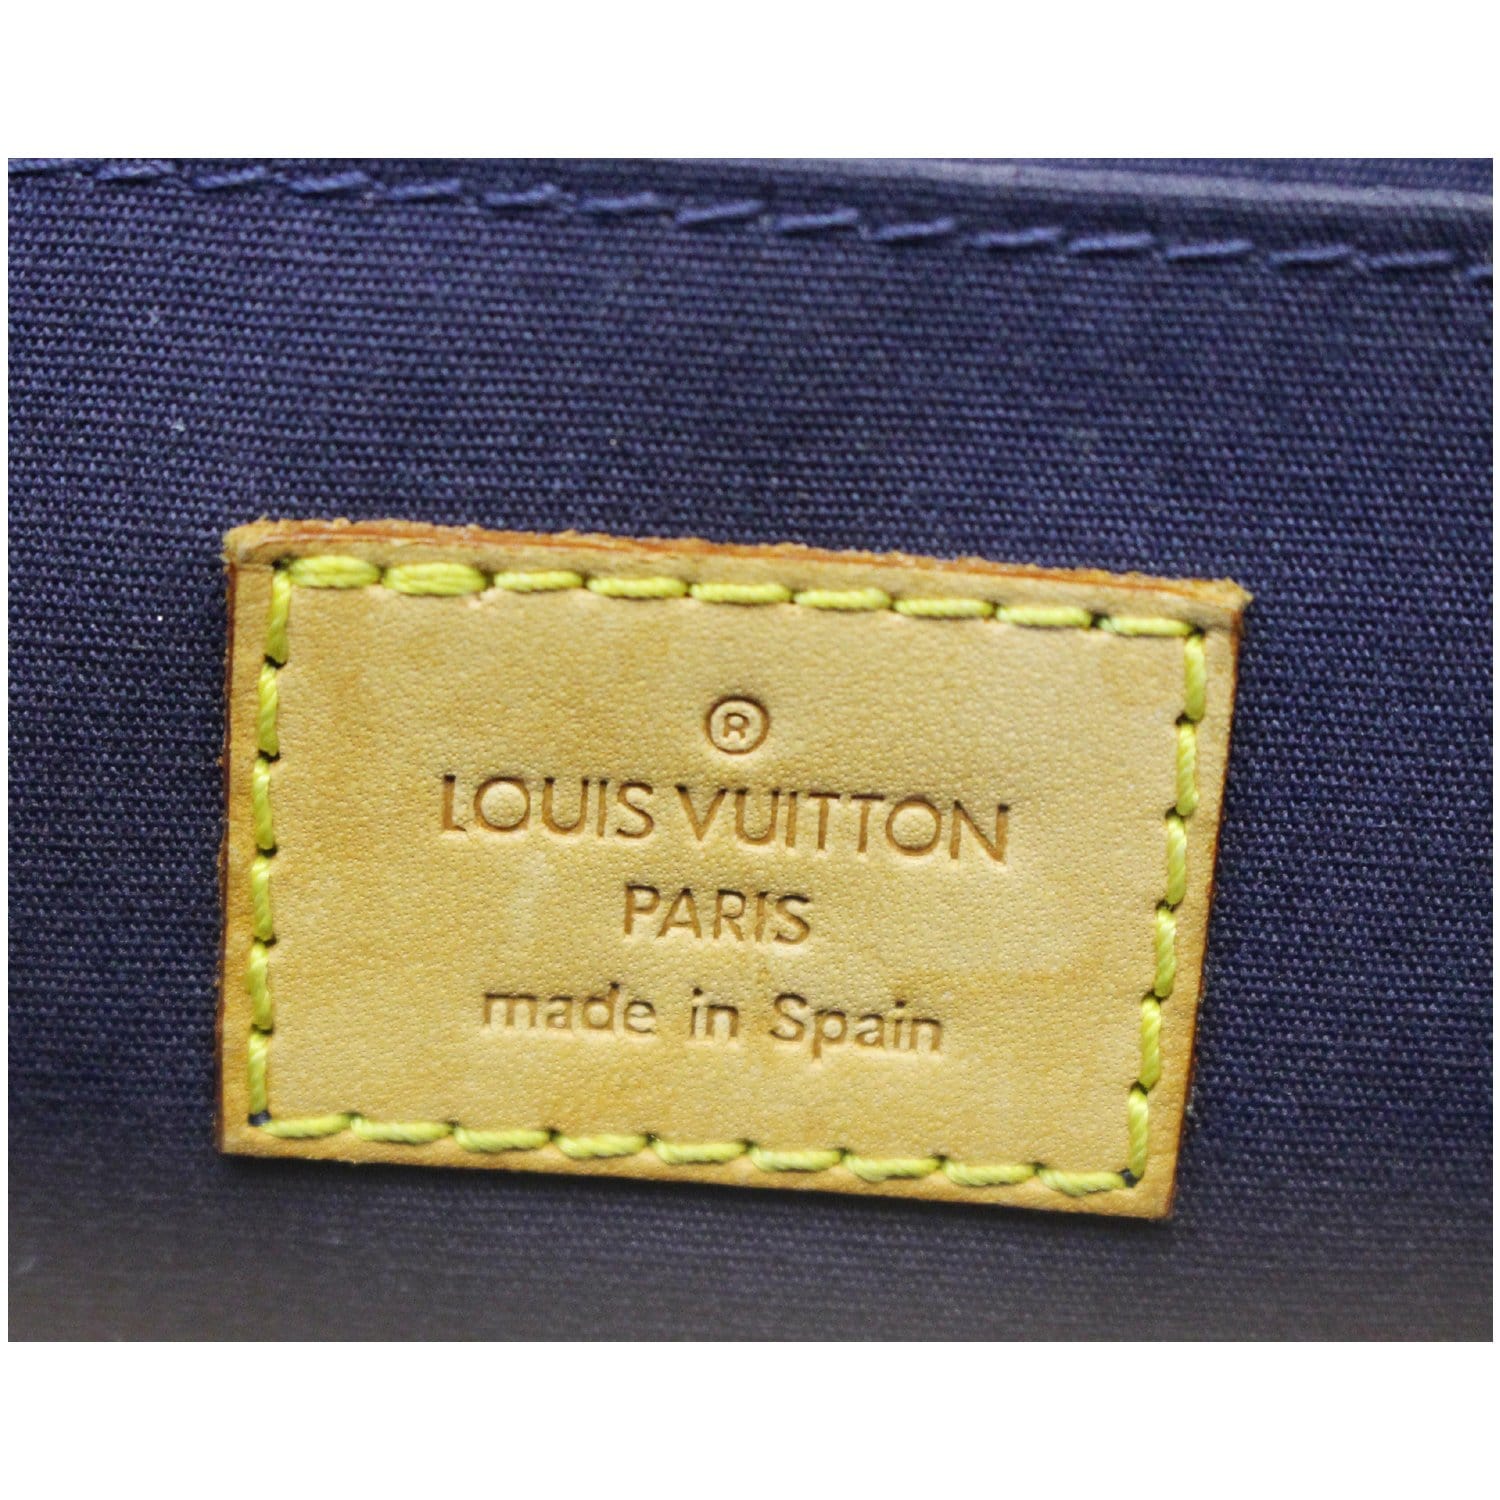 LOUIS VUITTON Roxbury Drive Monogram Vernis Clutch Bag Blue